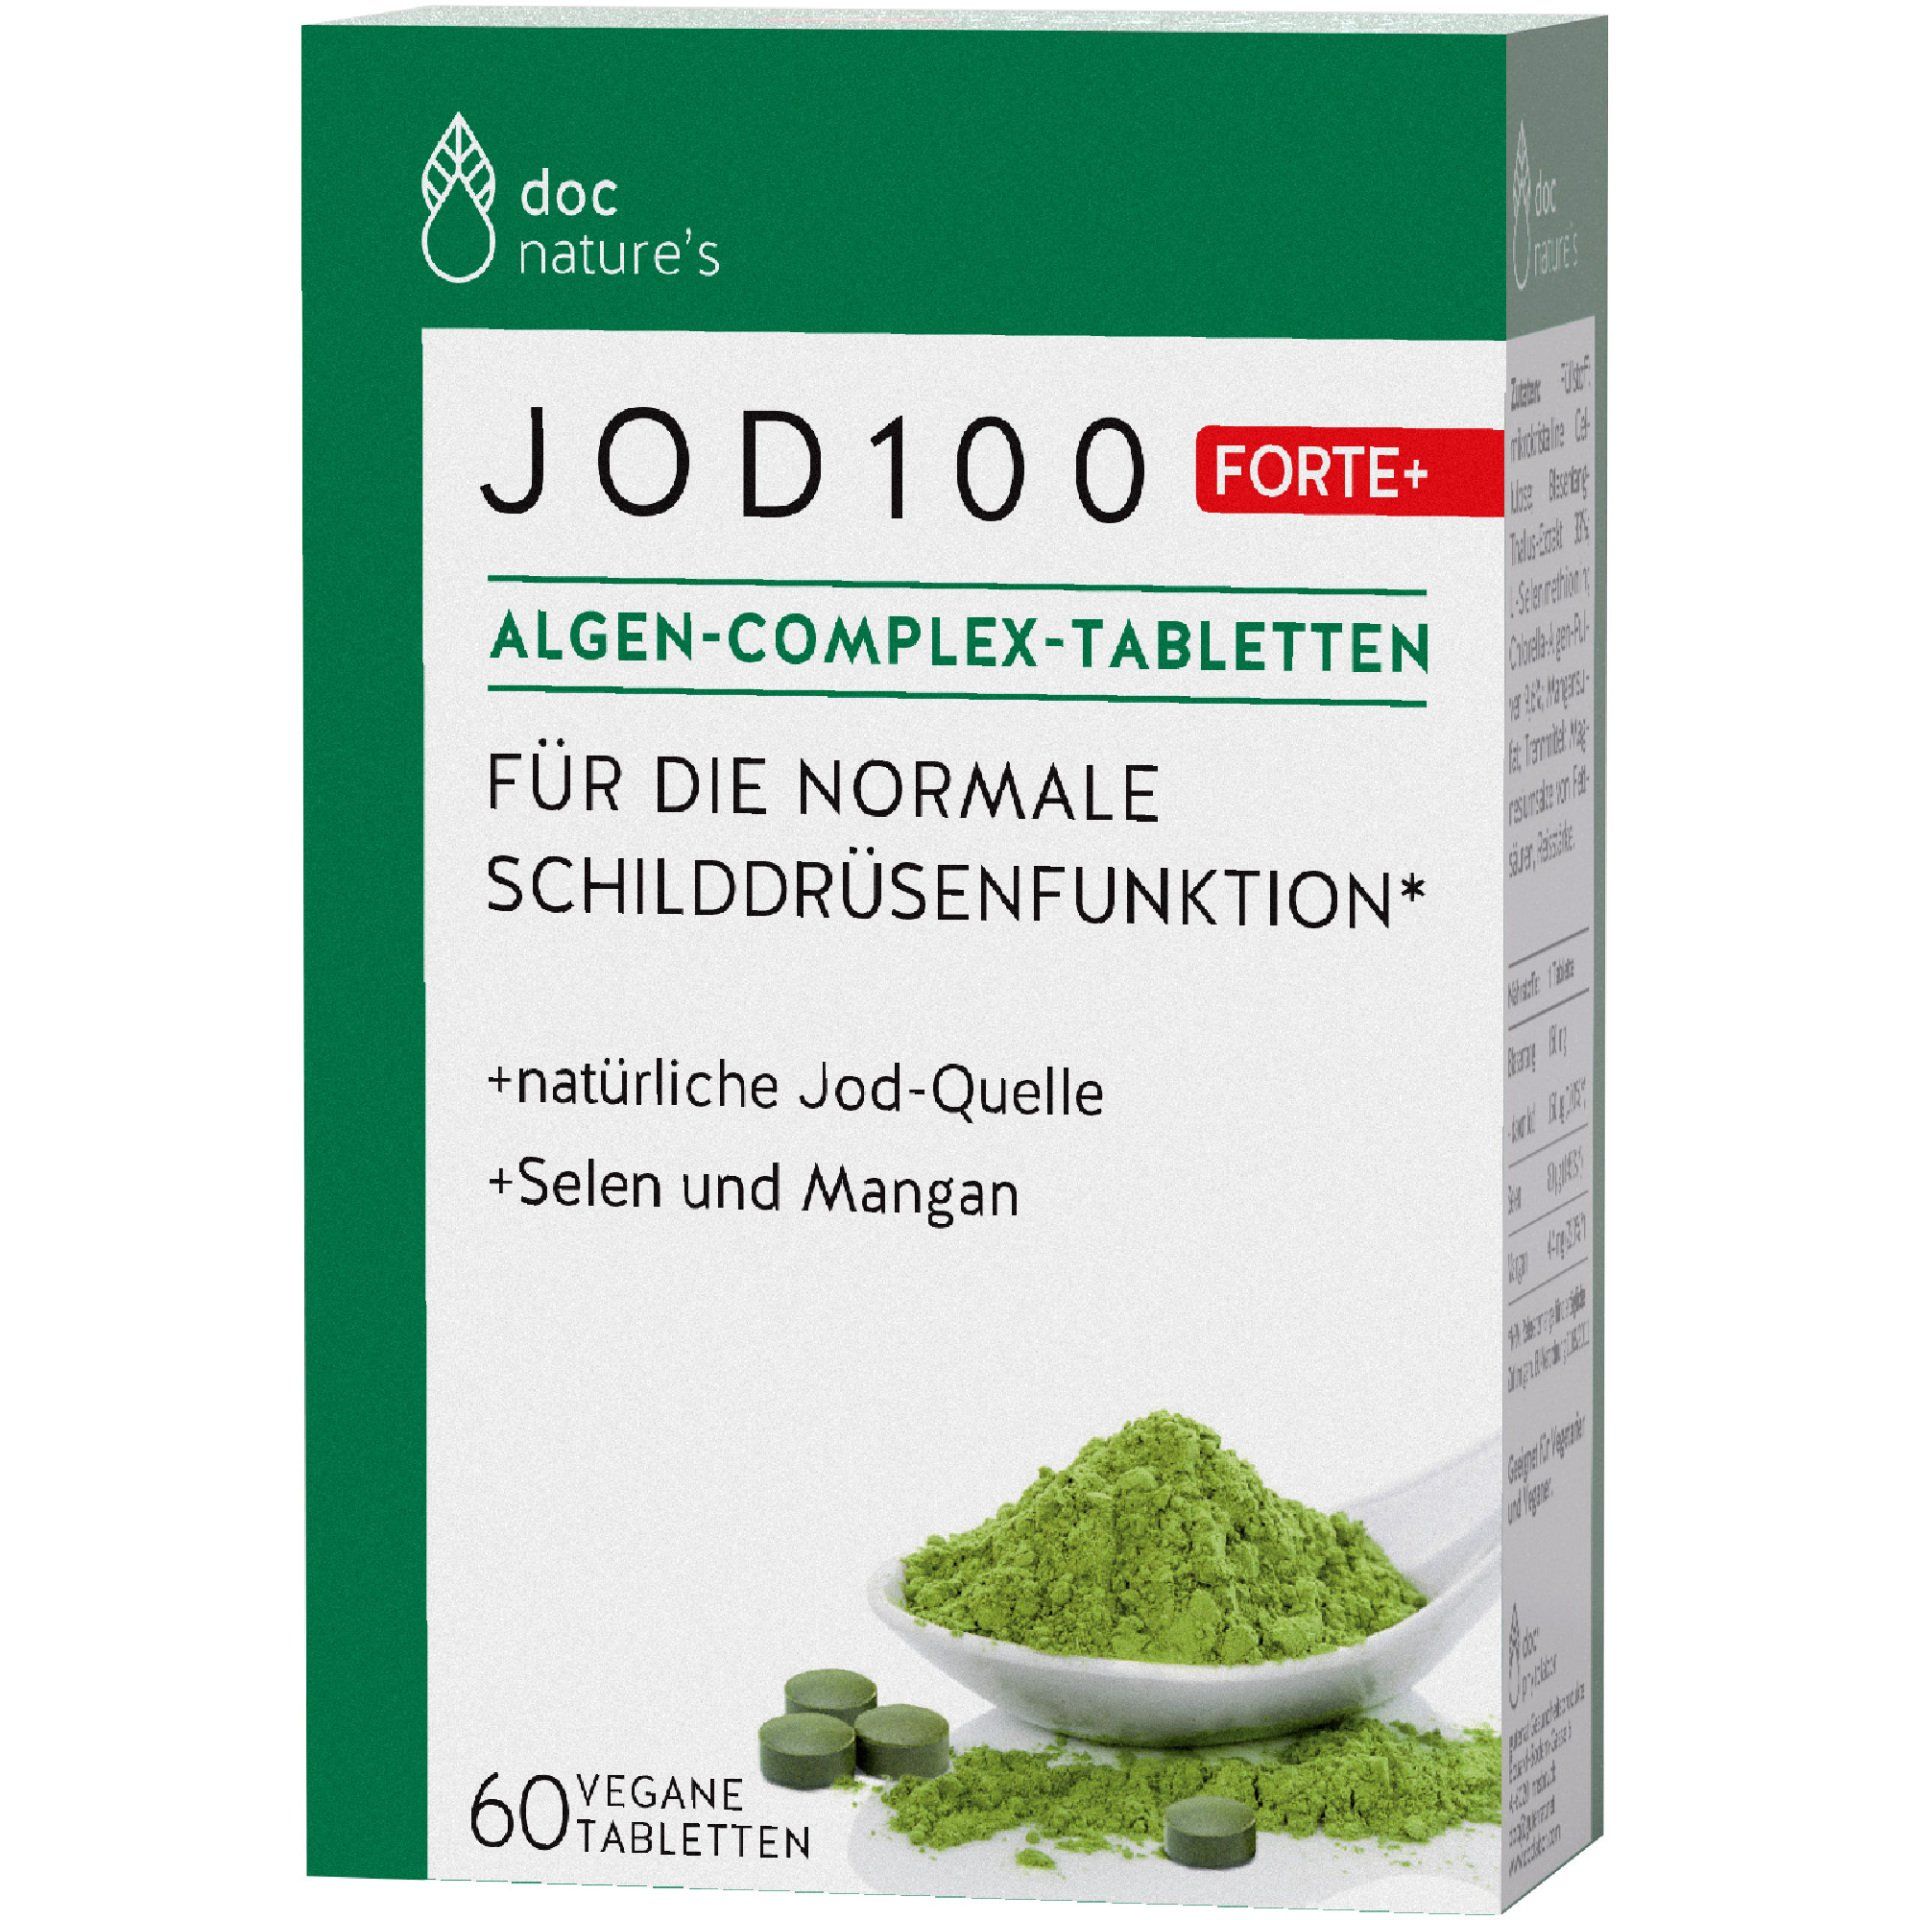 doc nature's  JOD 100 FORTE+  ALGEN-COMPLEX-TABLETTEN